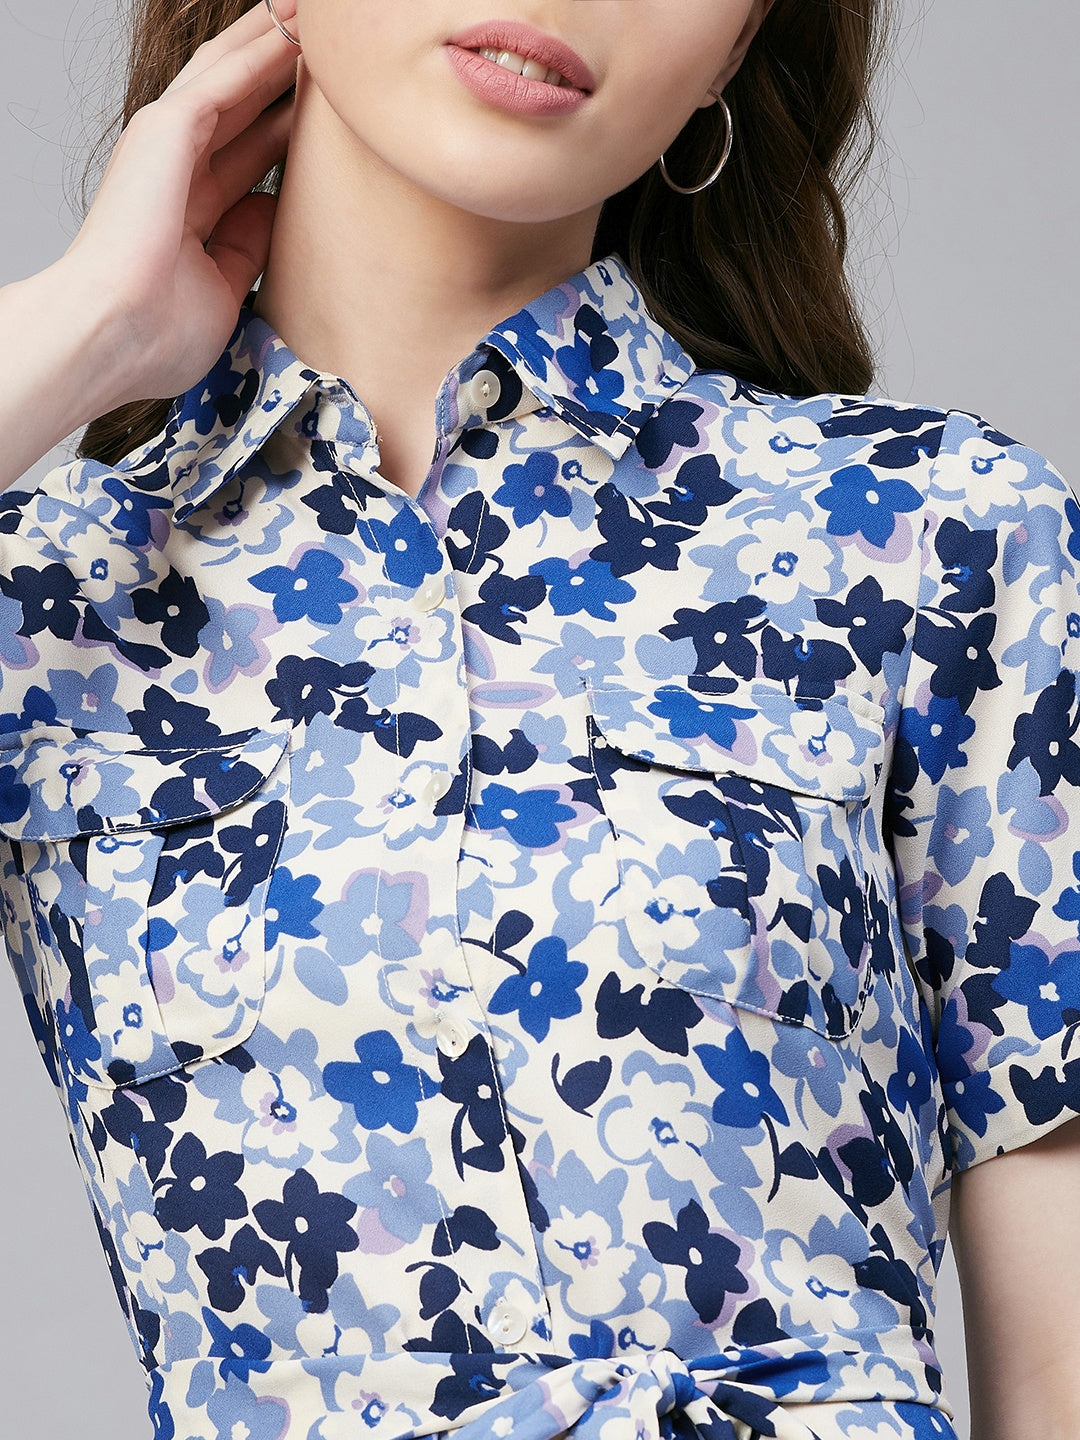 Women's Blue & White Floral Polyester Shirt Dress